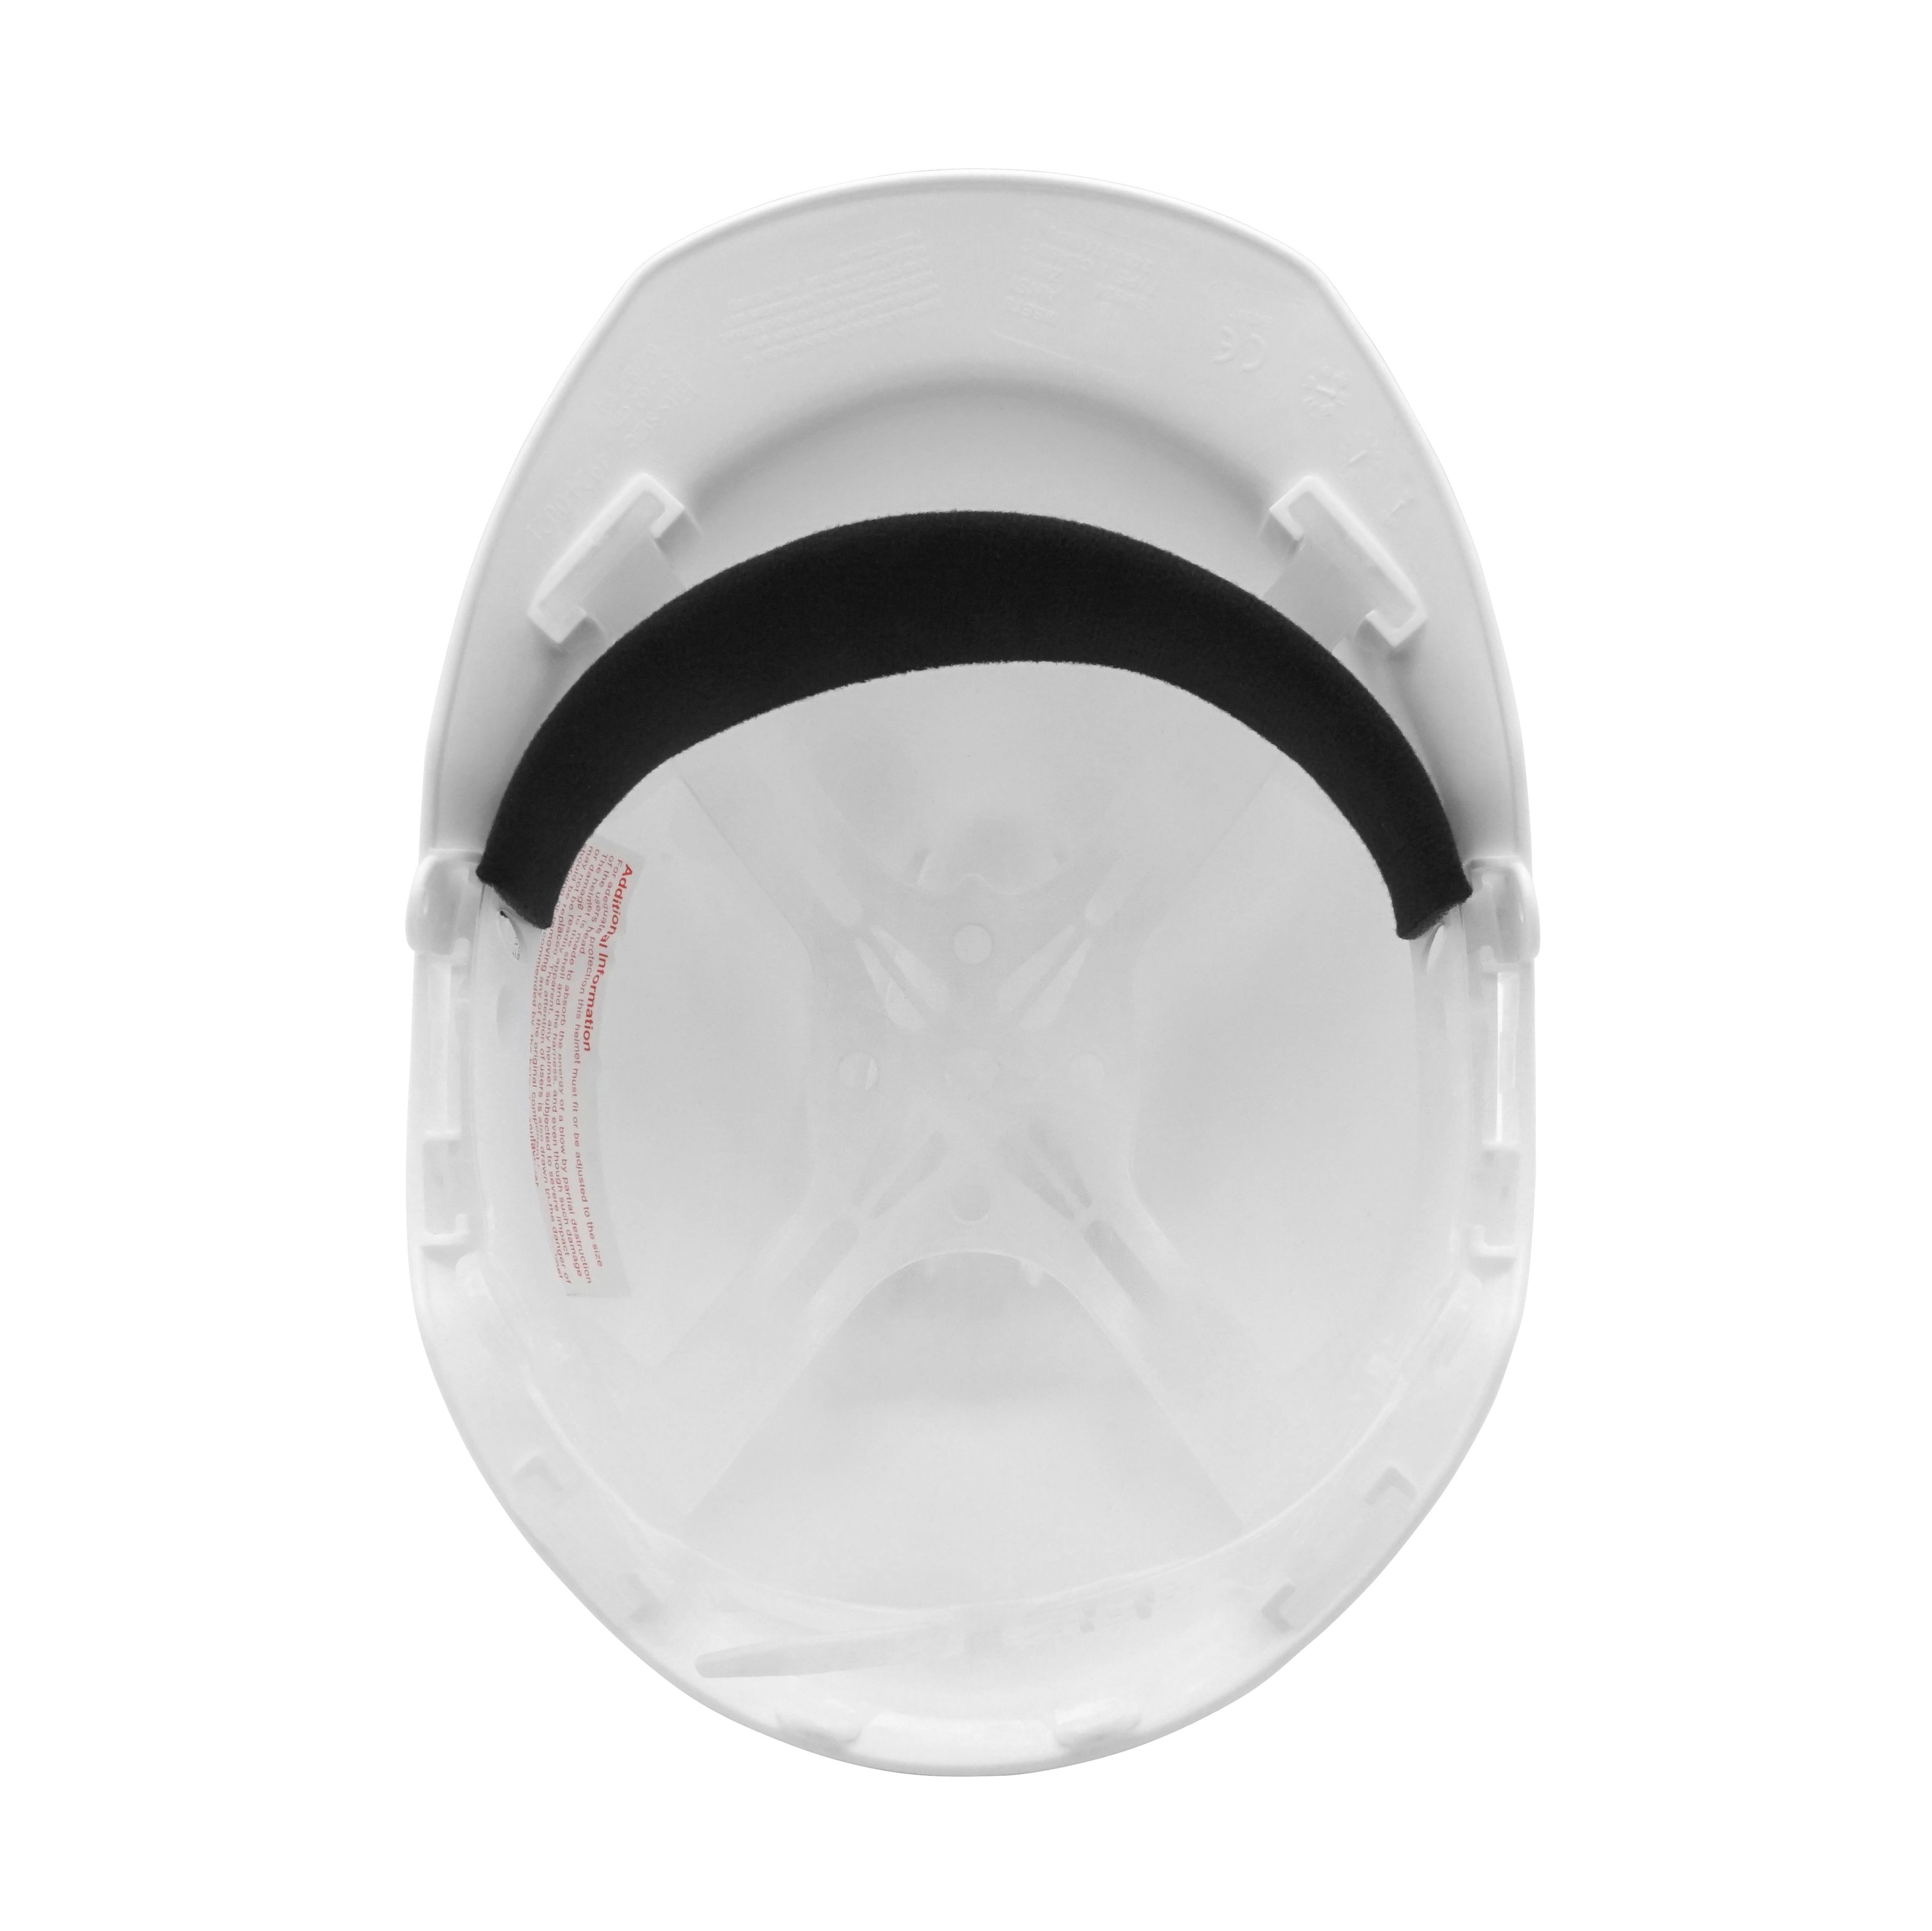 Site White SHE210 Safety helmet